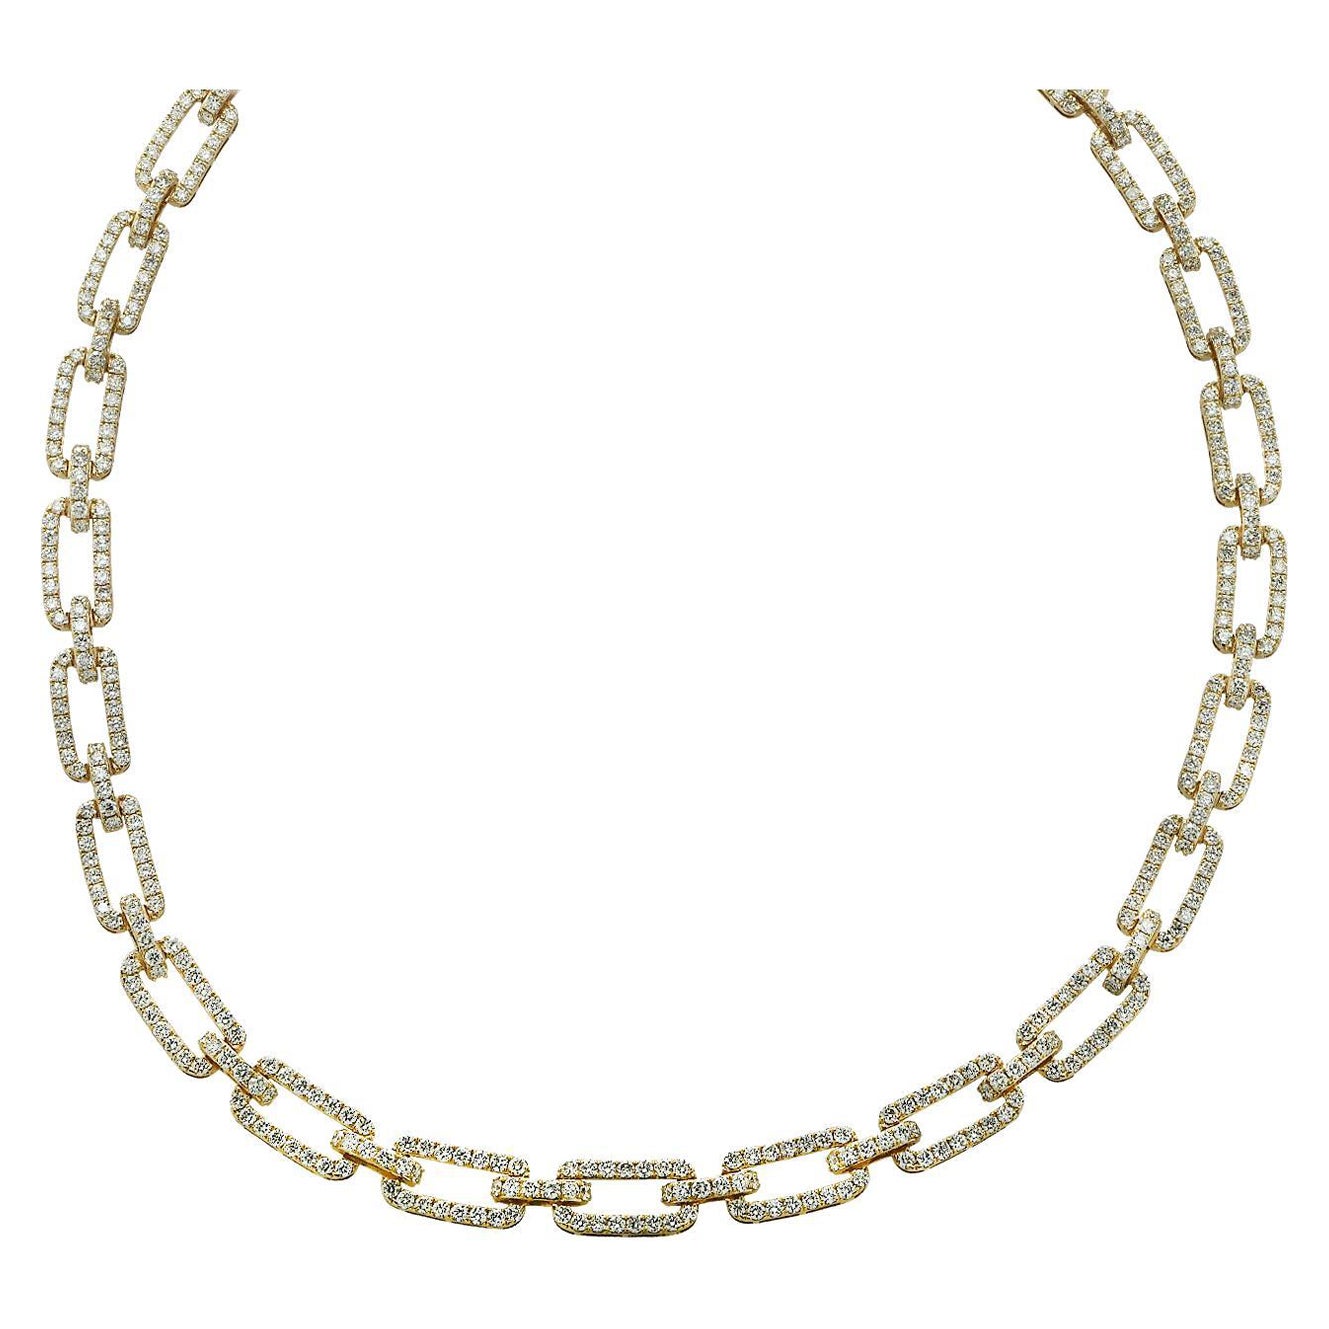 12.52 Carat Round Diamond Link Necklace For Sale